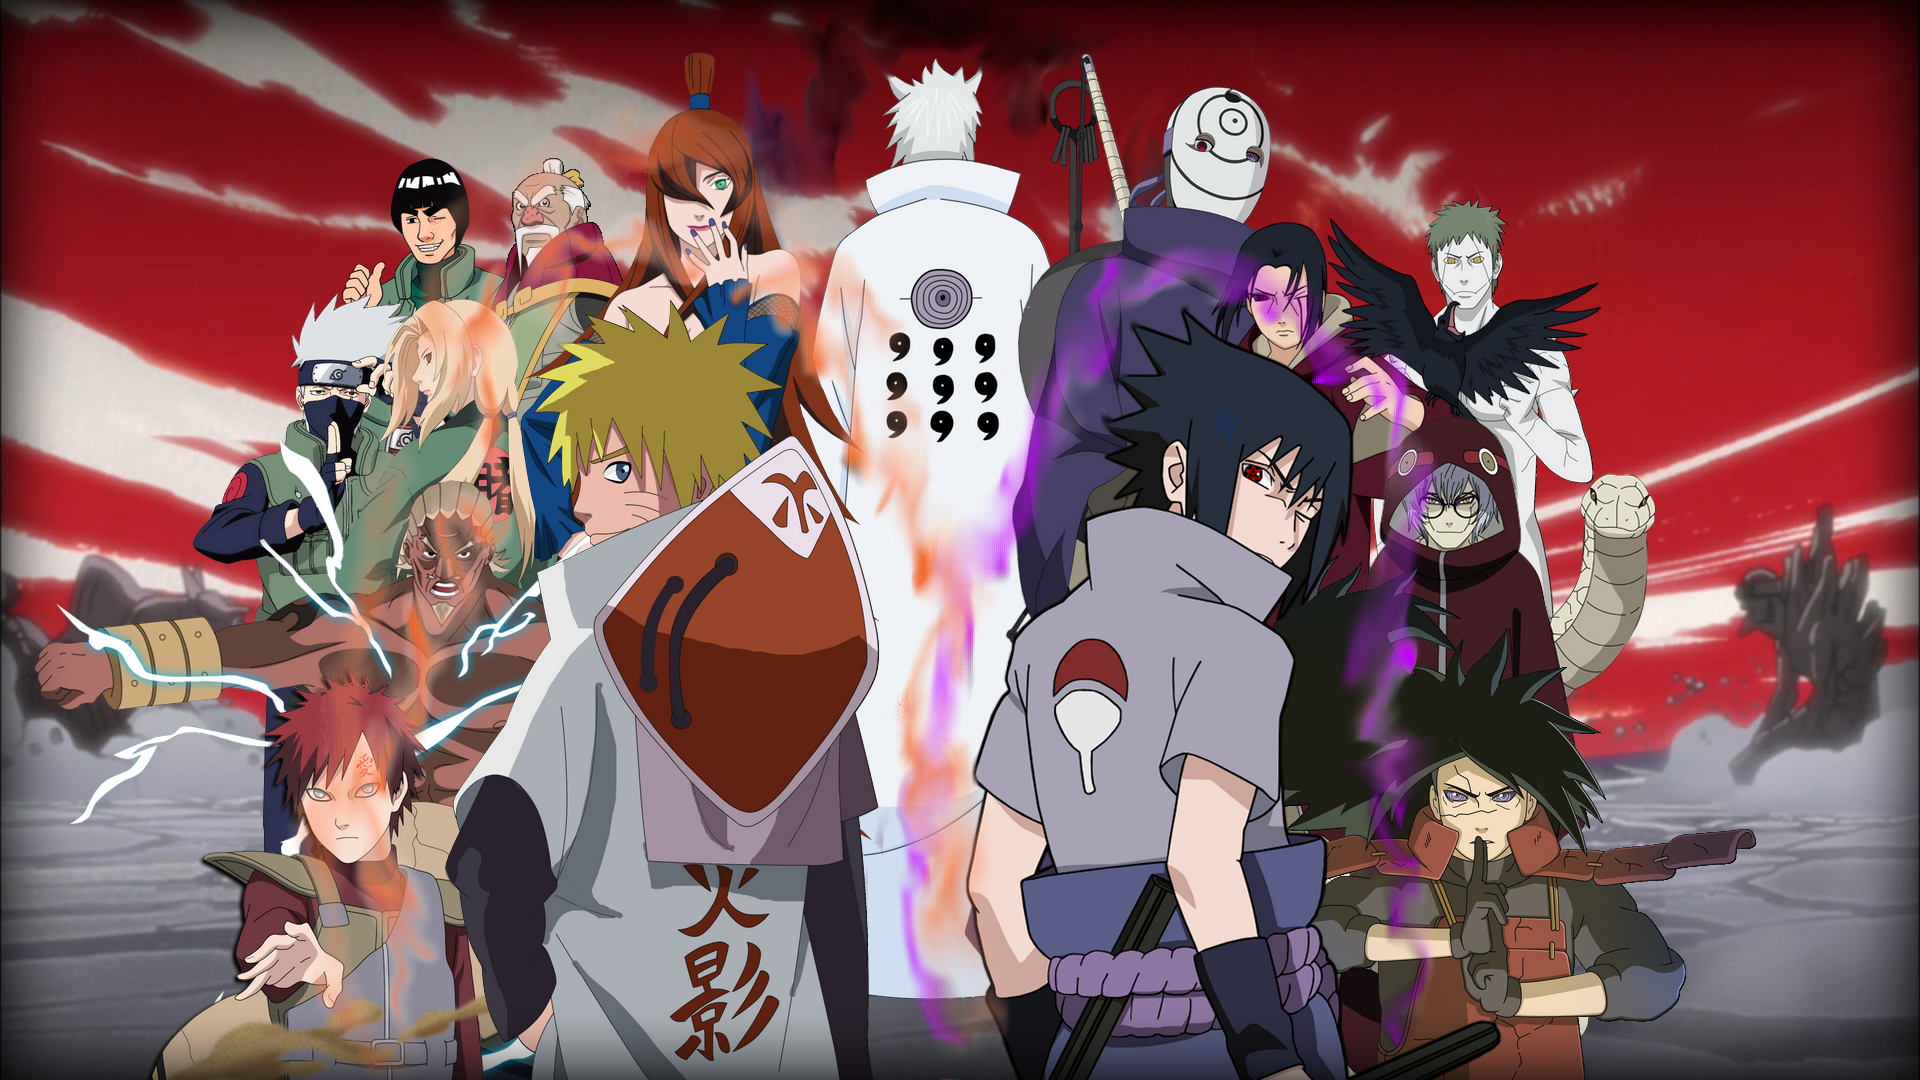 A17 Naruto anime Shippuden War HD Desktop background wallpapers downloads